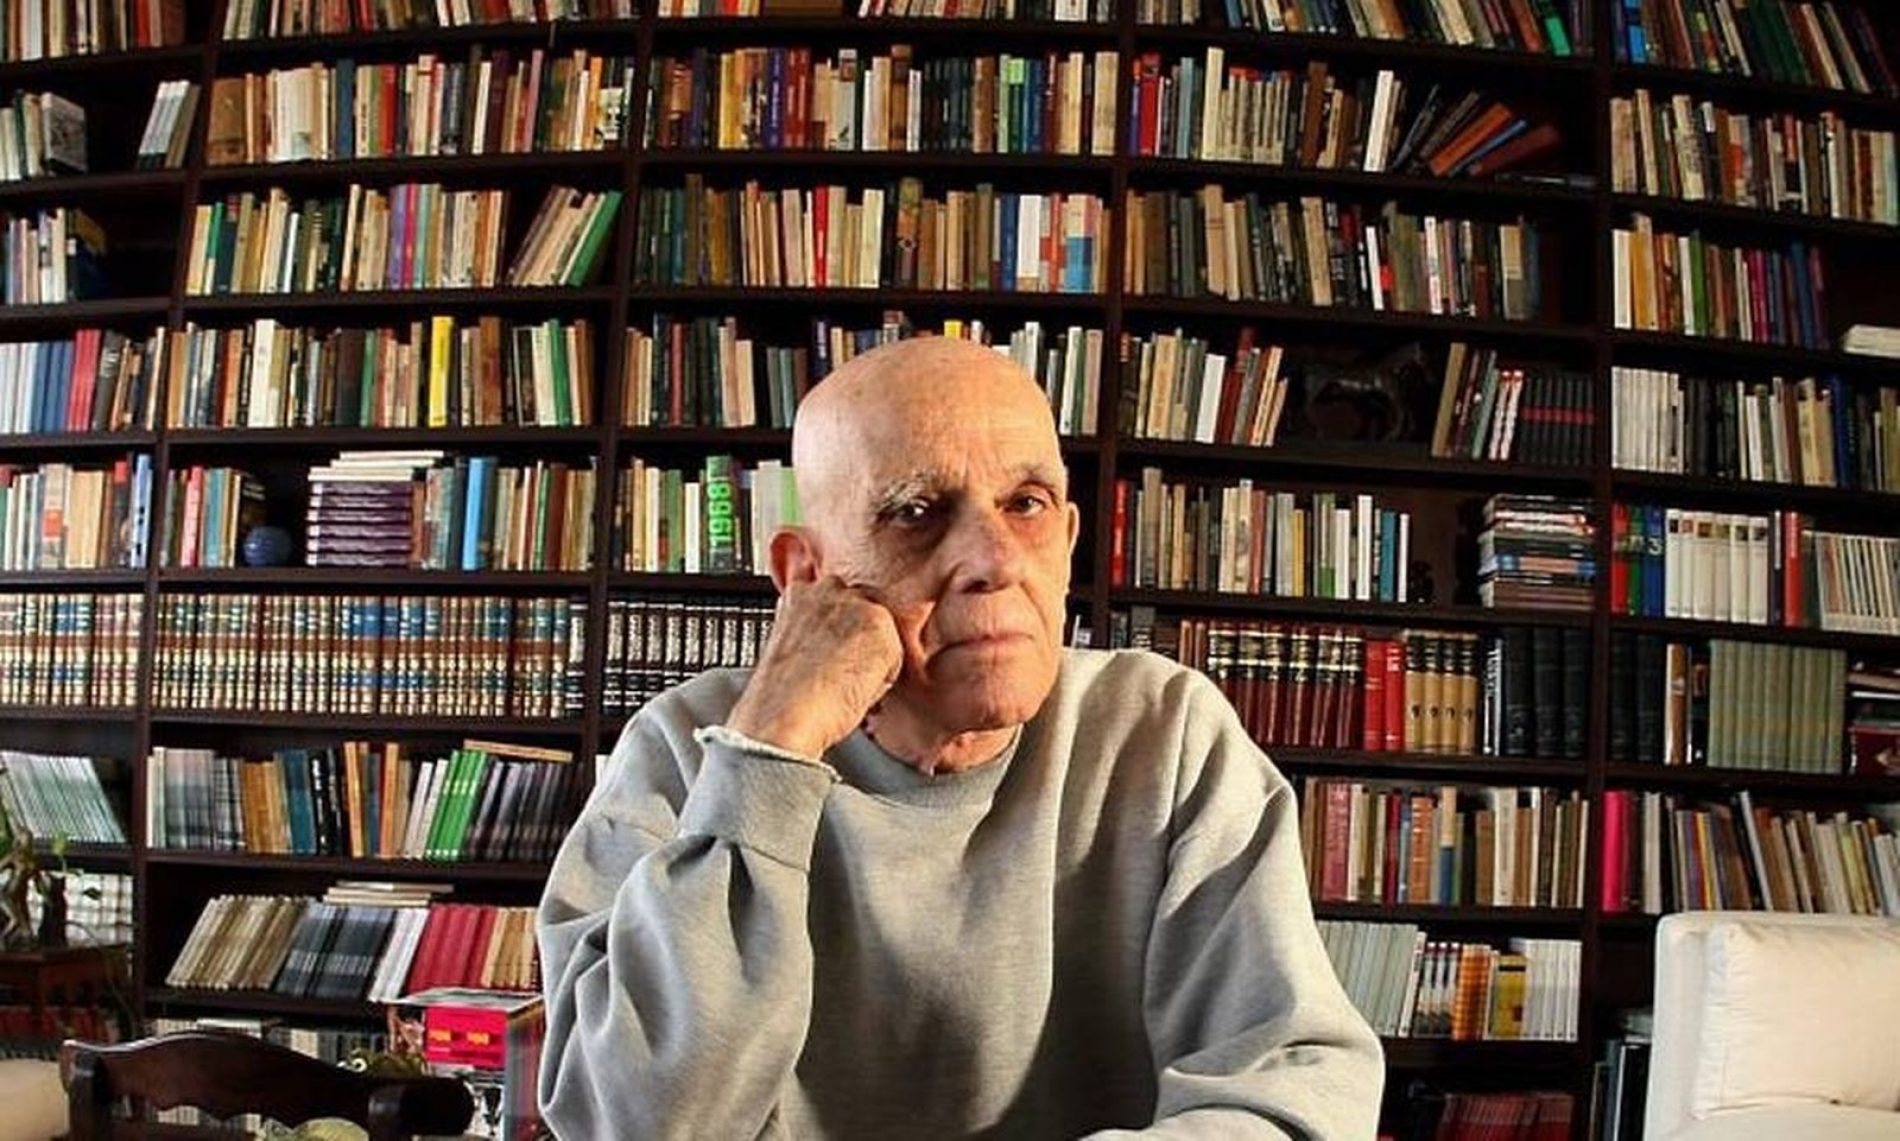 Rubem Fonseca, escritor que renovou a literatura brasileira no século 20, morre aos 94 anos